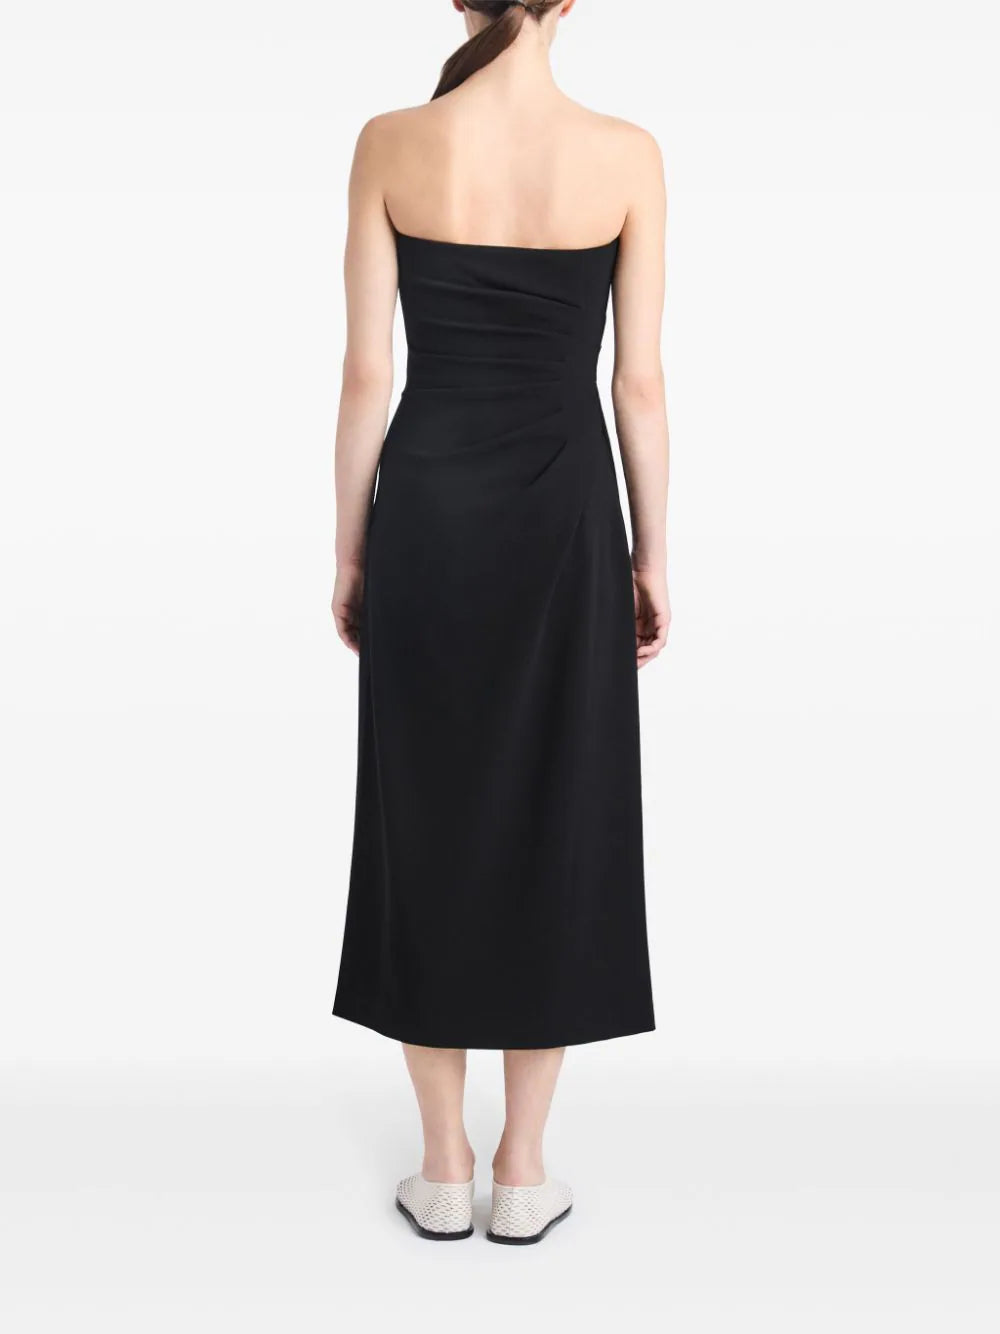 Shira Strapless Dress in Black